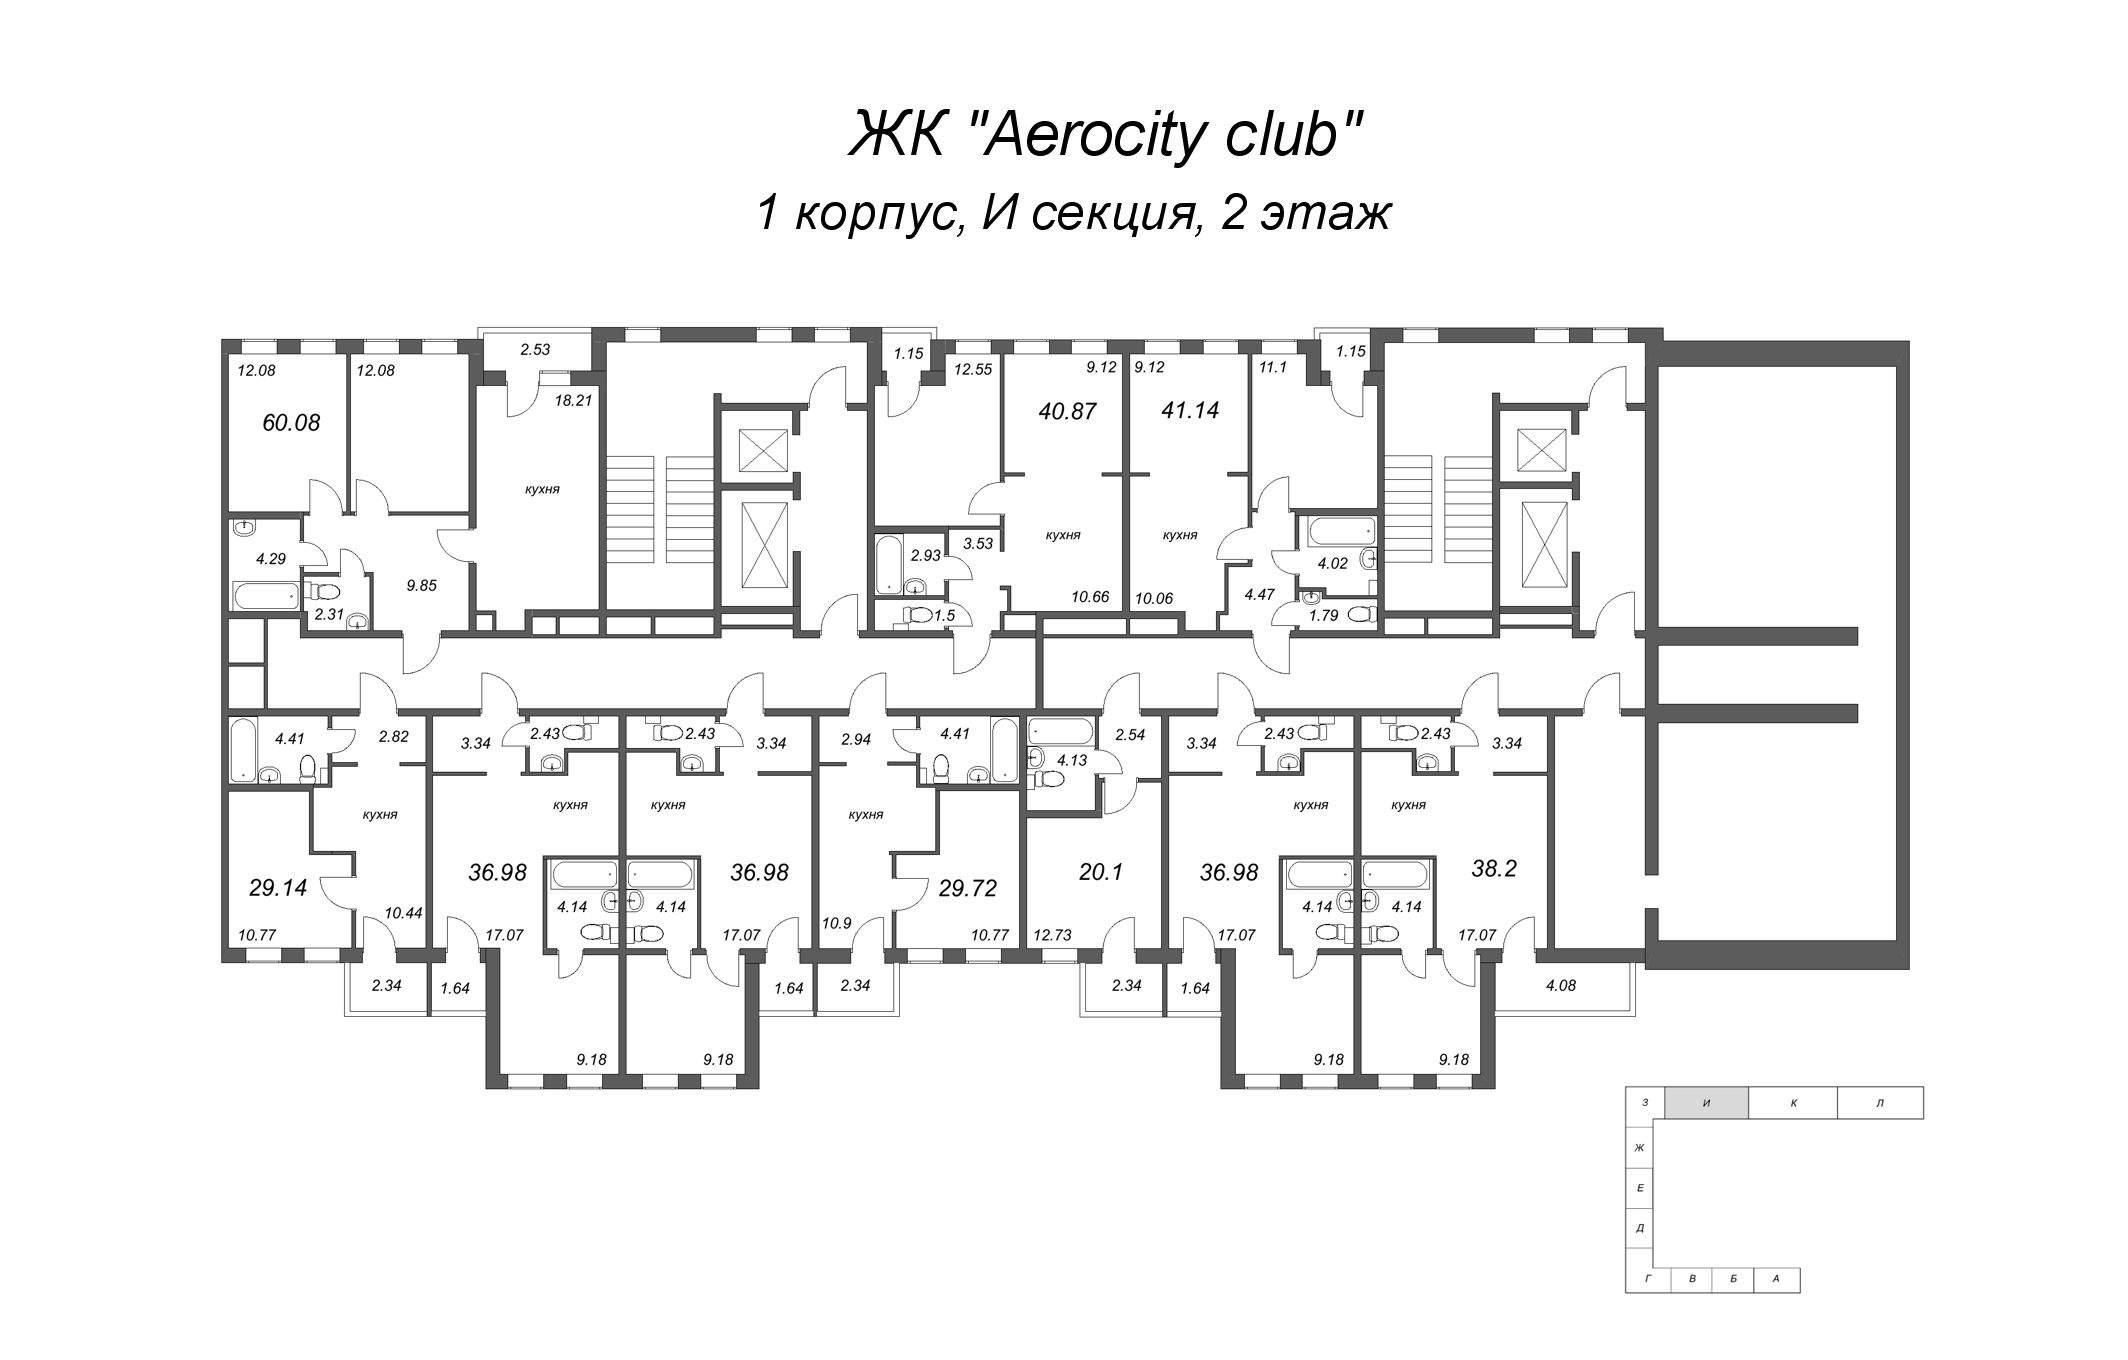 2-комнатная (Евро) квартира, 41.14 м² - планировка этажа